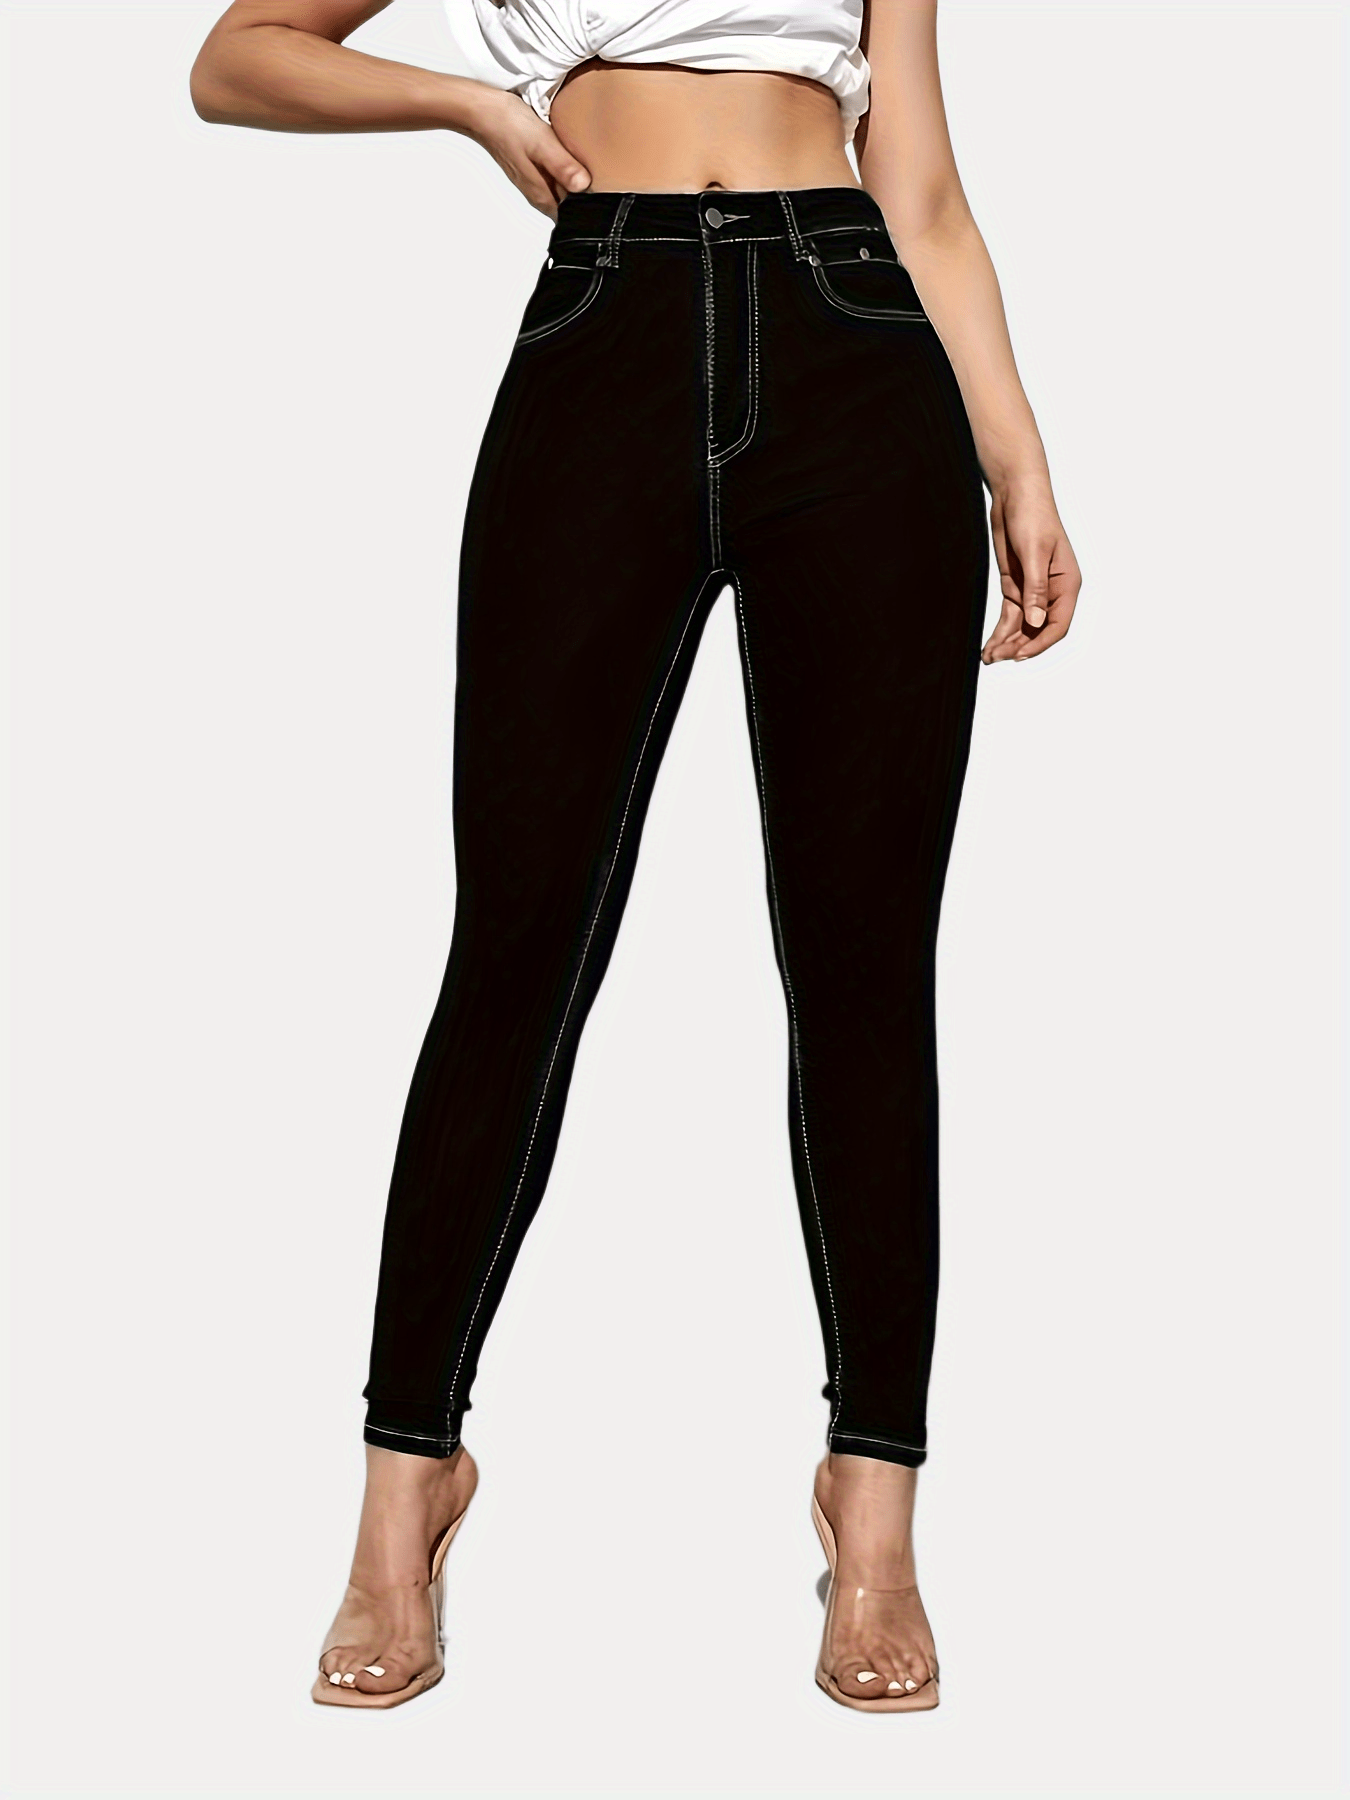 Deep Blue Stretchy High Waist Denim Pants, Slash Pocket Sexy Classic Skinny  Jeans, Women's Denim Jeans & Clothing